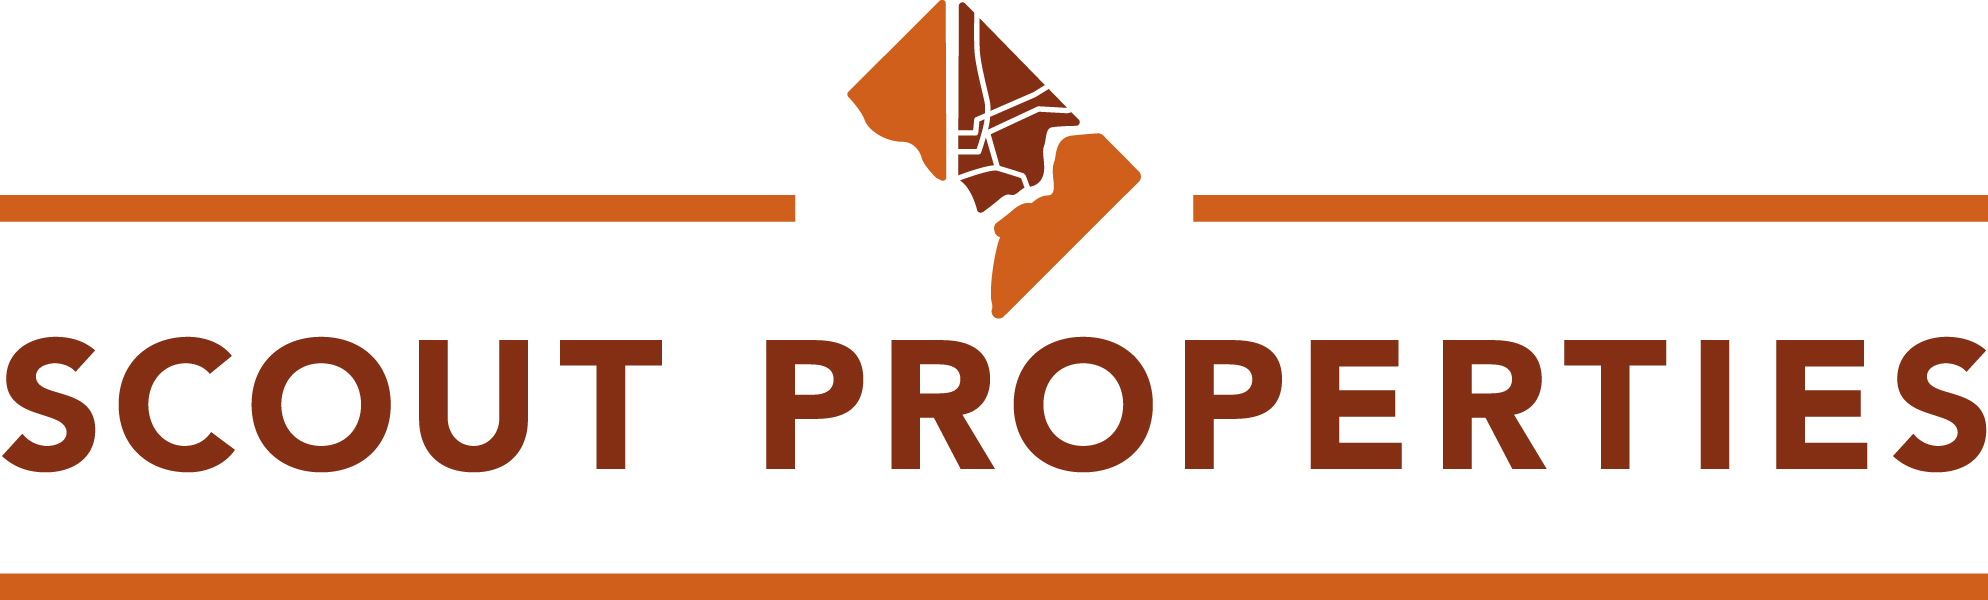 SCOUT PROPERTIES logo